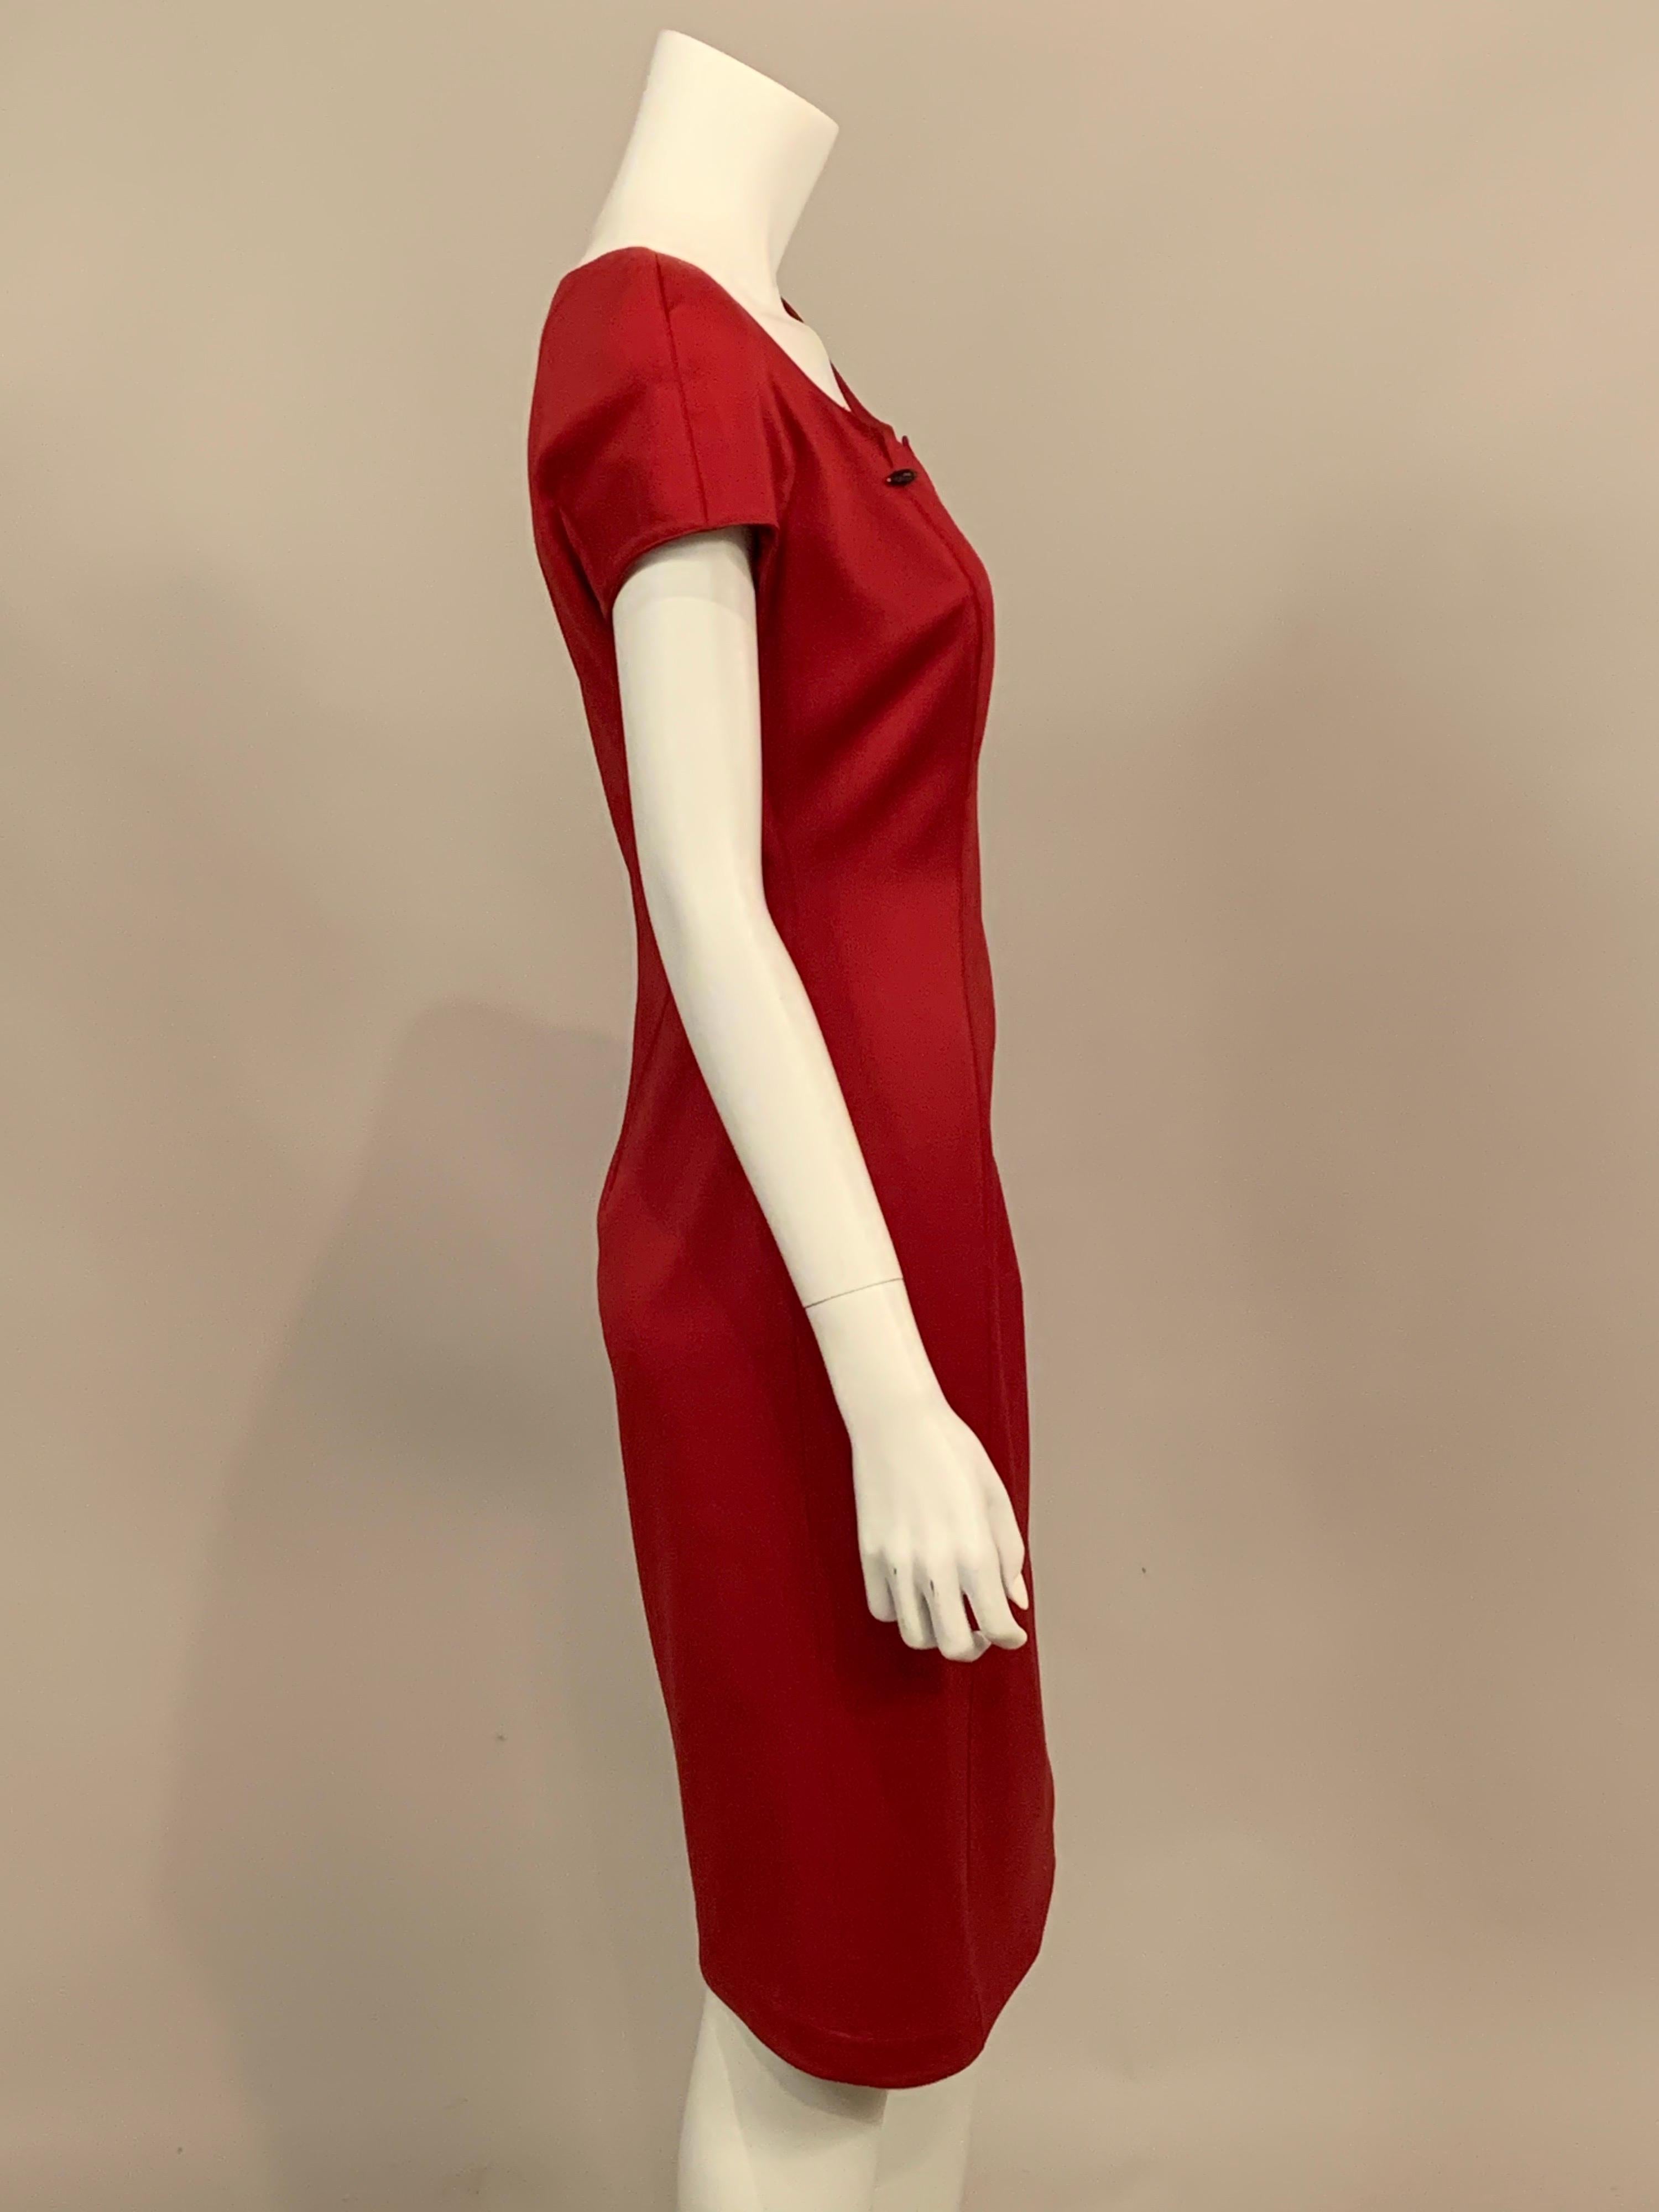 thierry mugler red dress